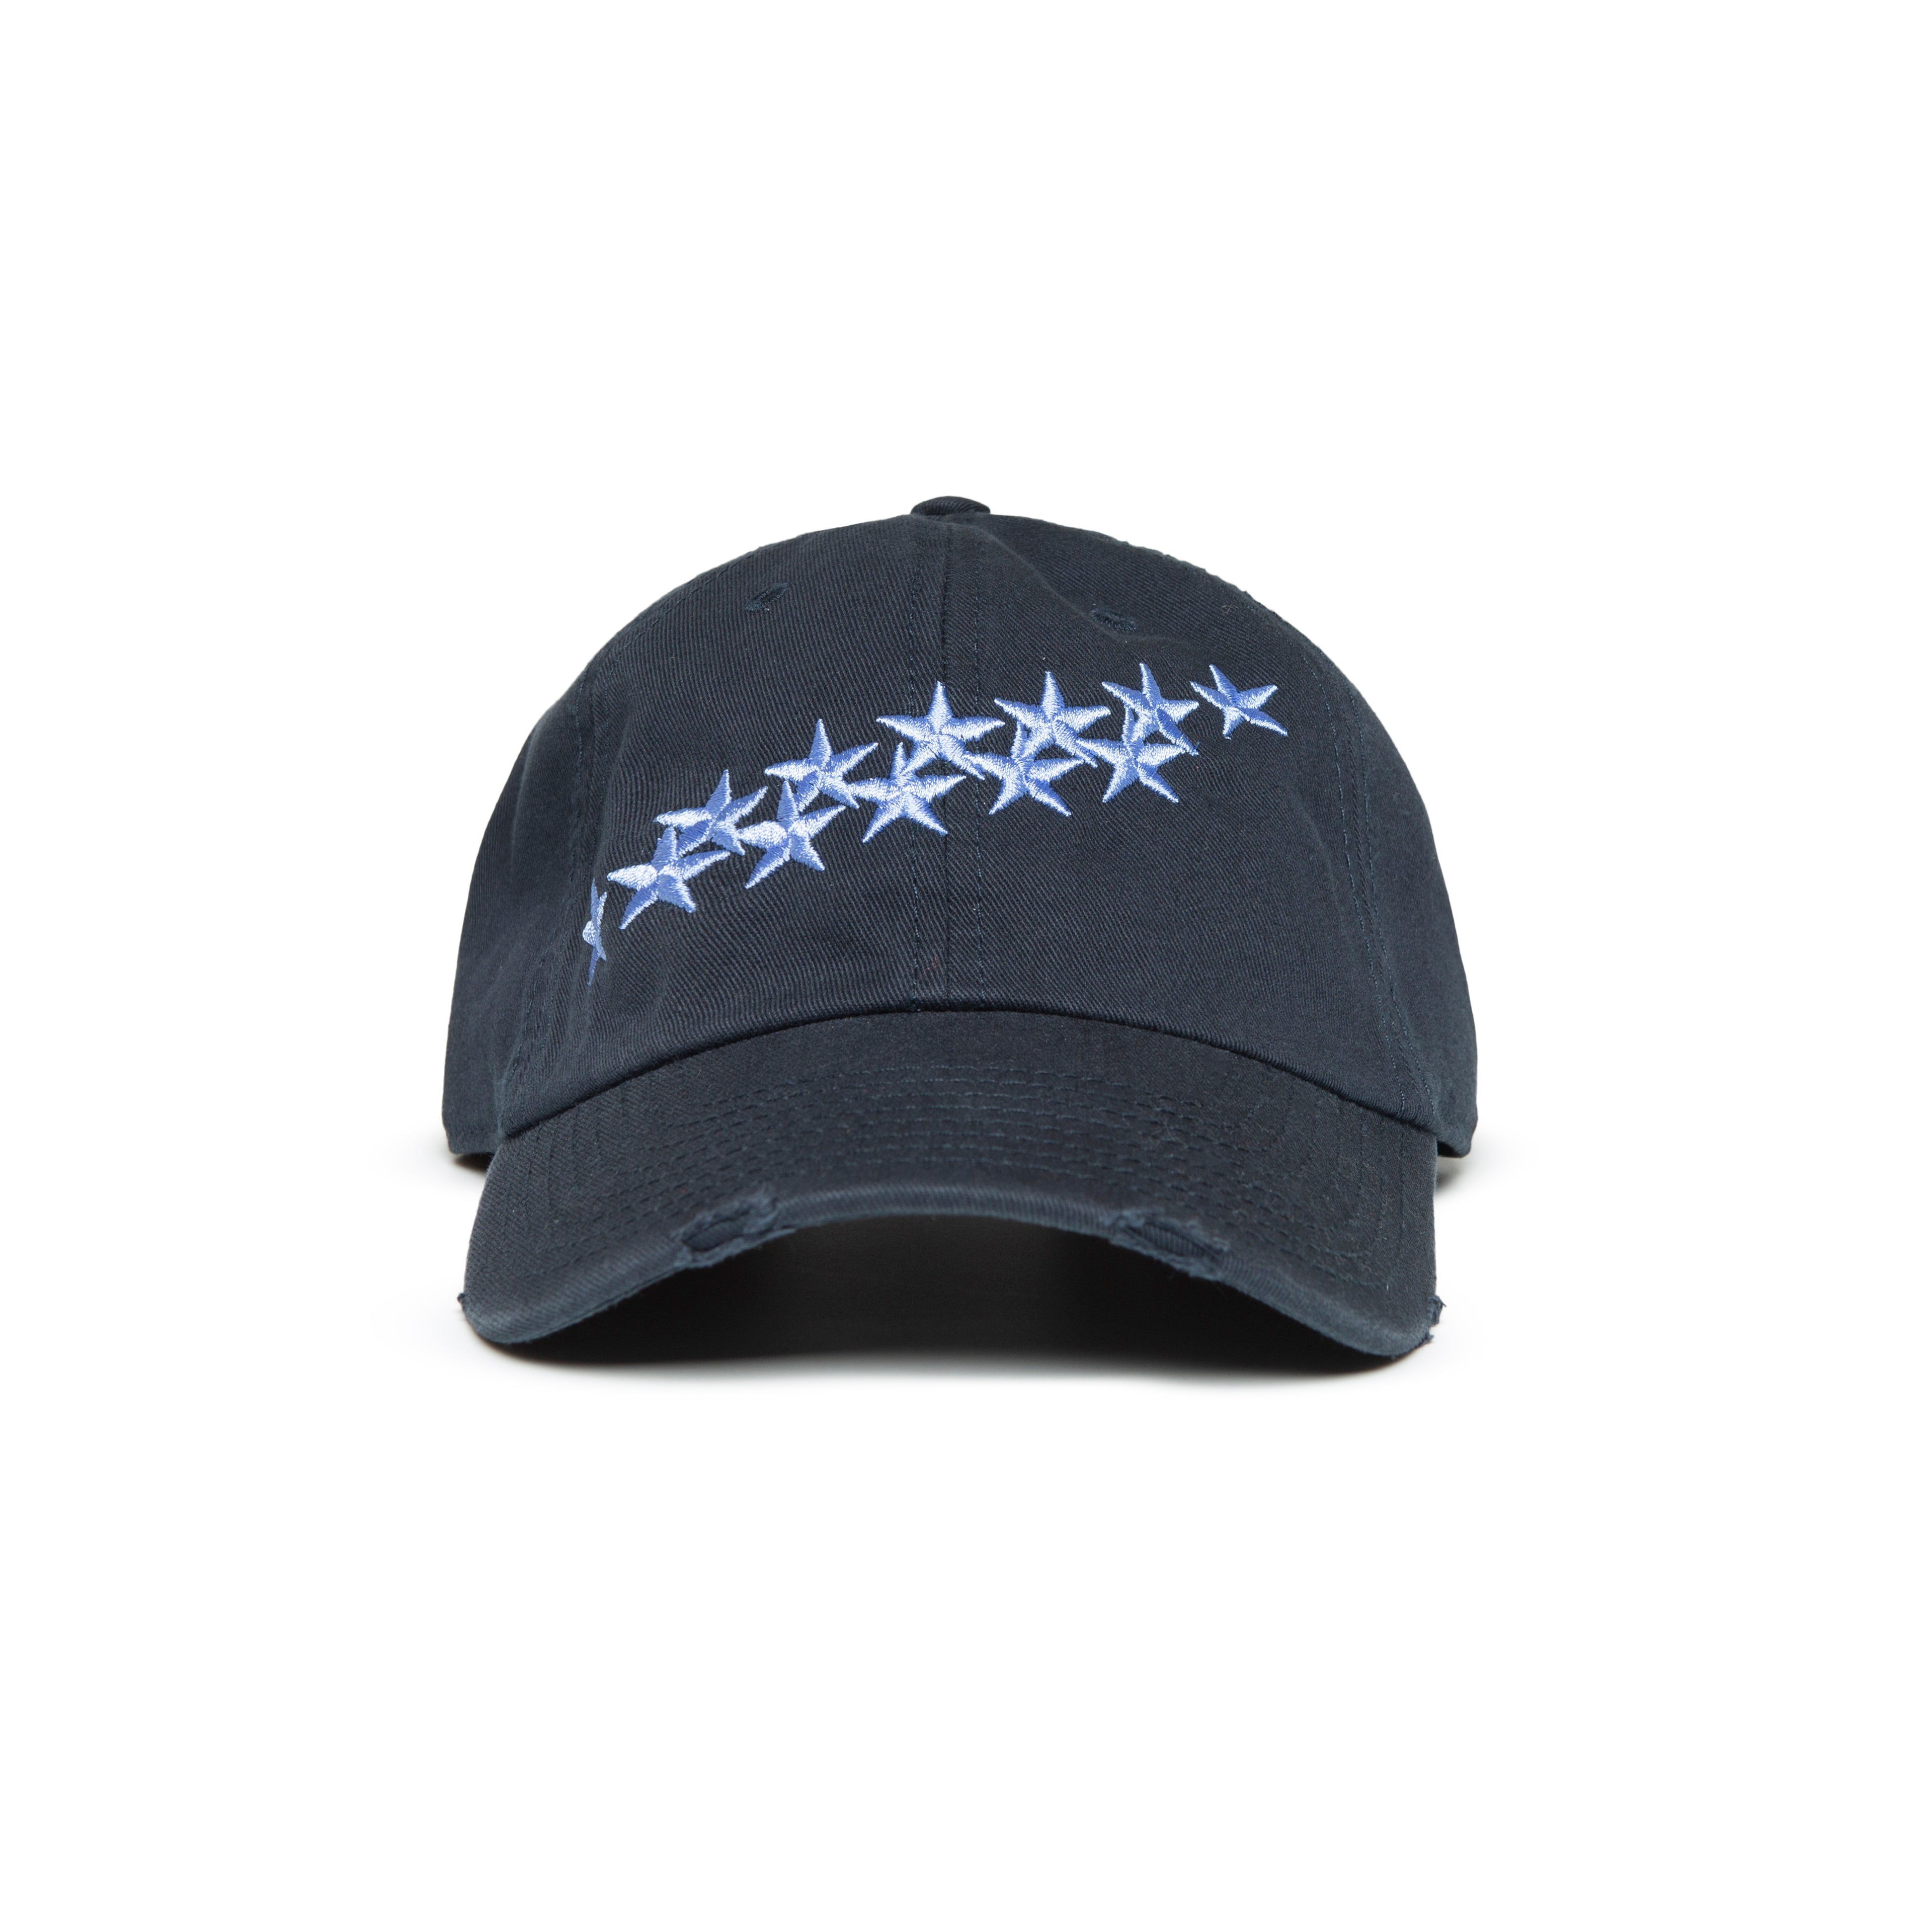 STARS CAP NAVY